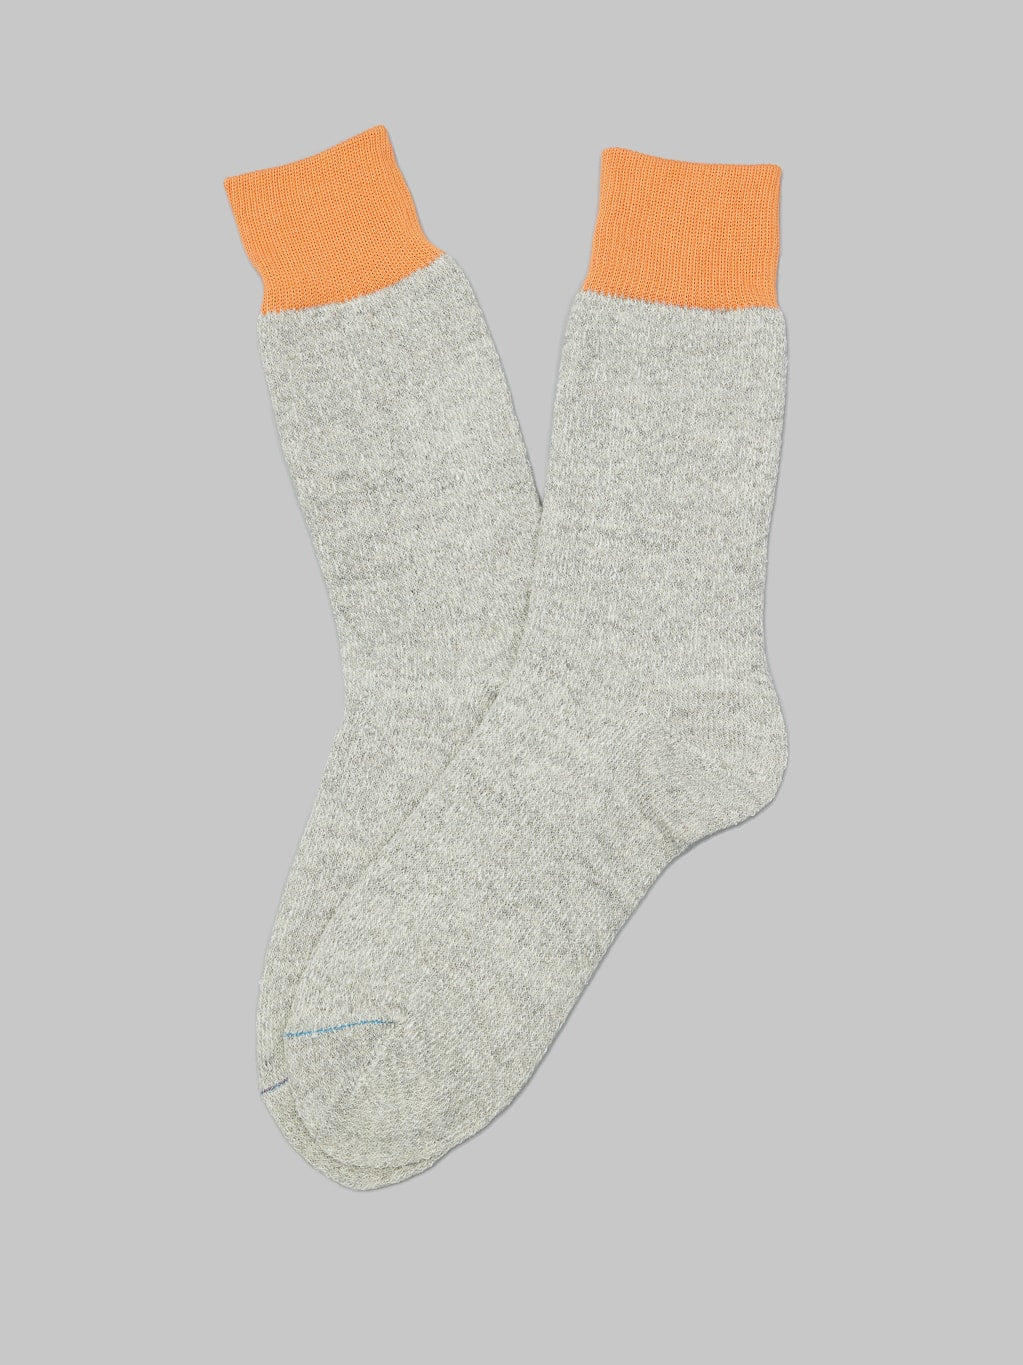 rototo double face crew socks silk cotton orange gray made in japan